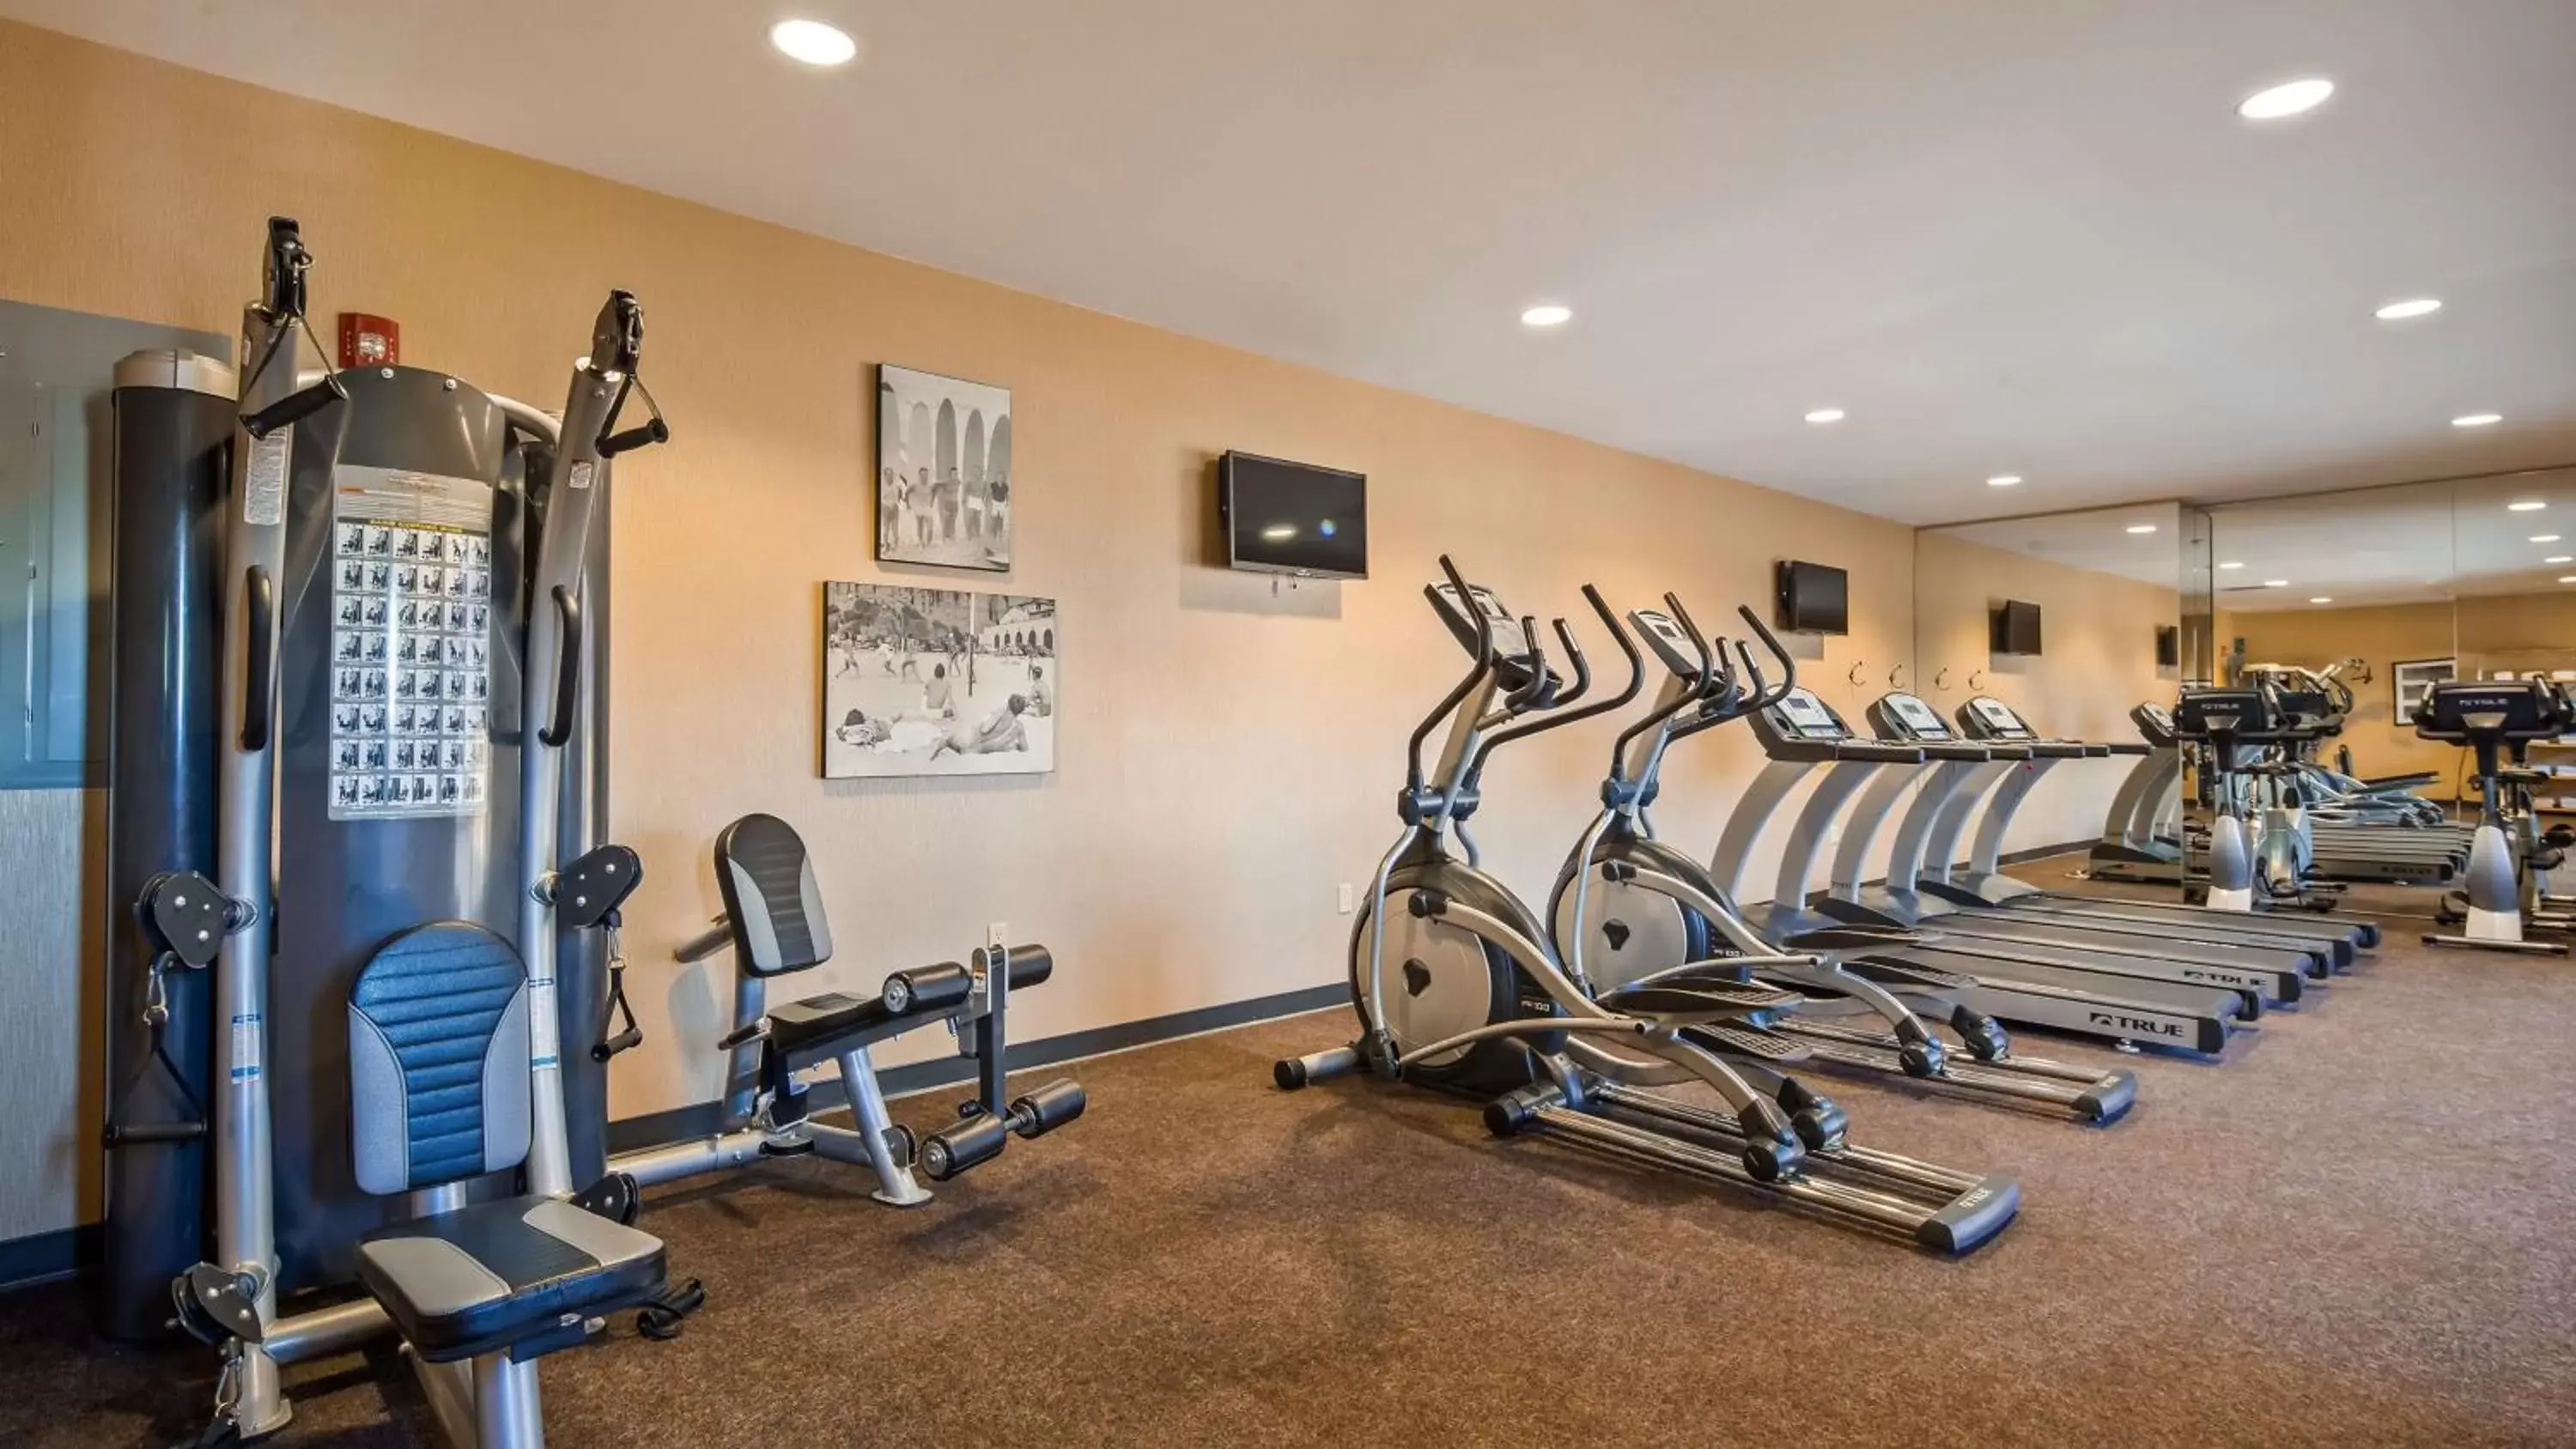 Fitness centre/facilities, Fitness Center/Facilities in Best Western Plus Anaheim Inn